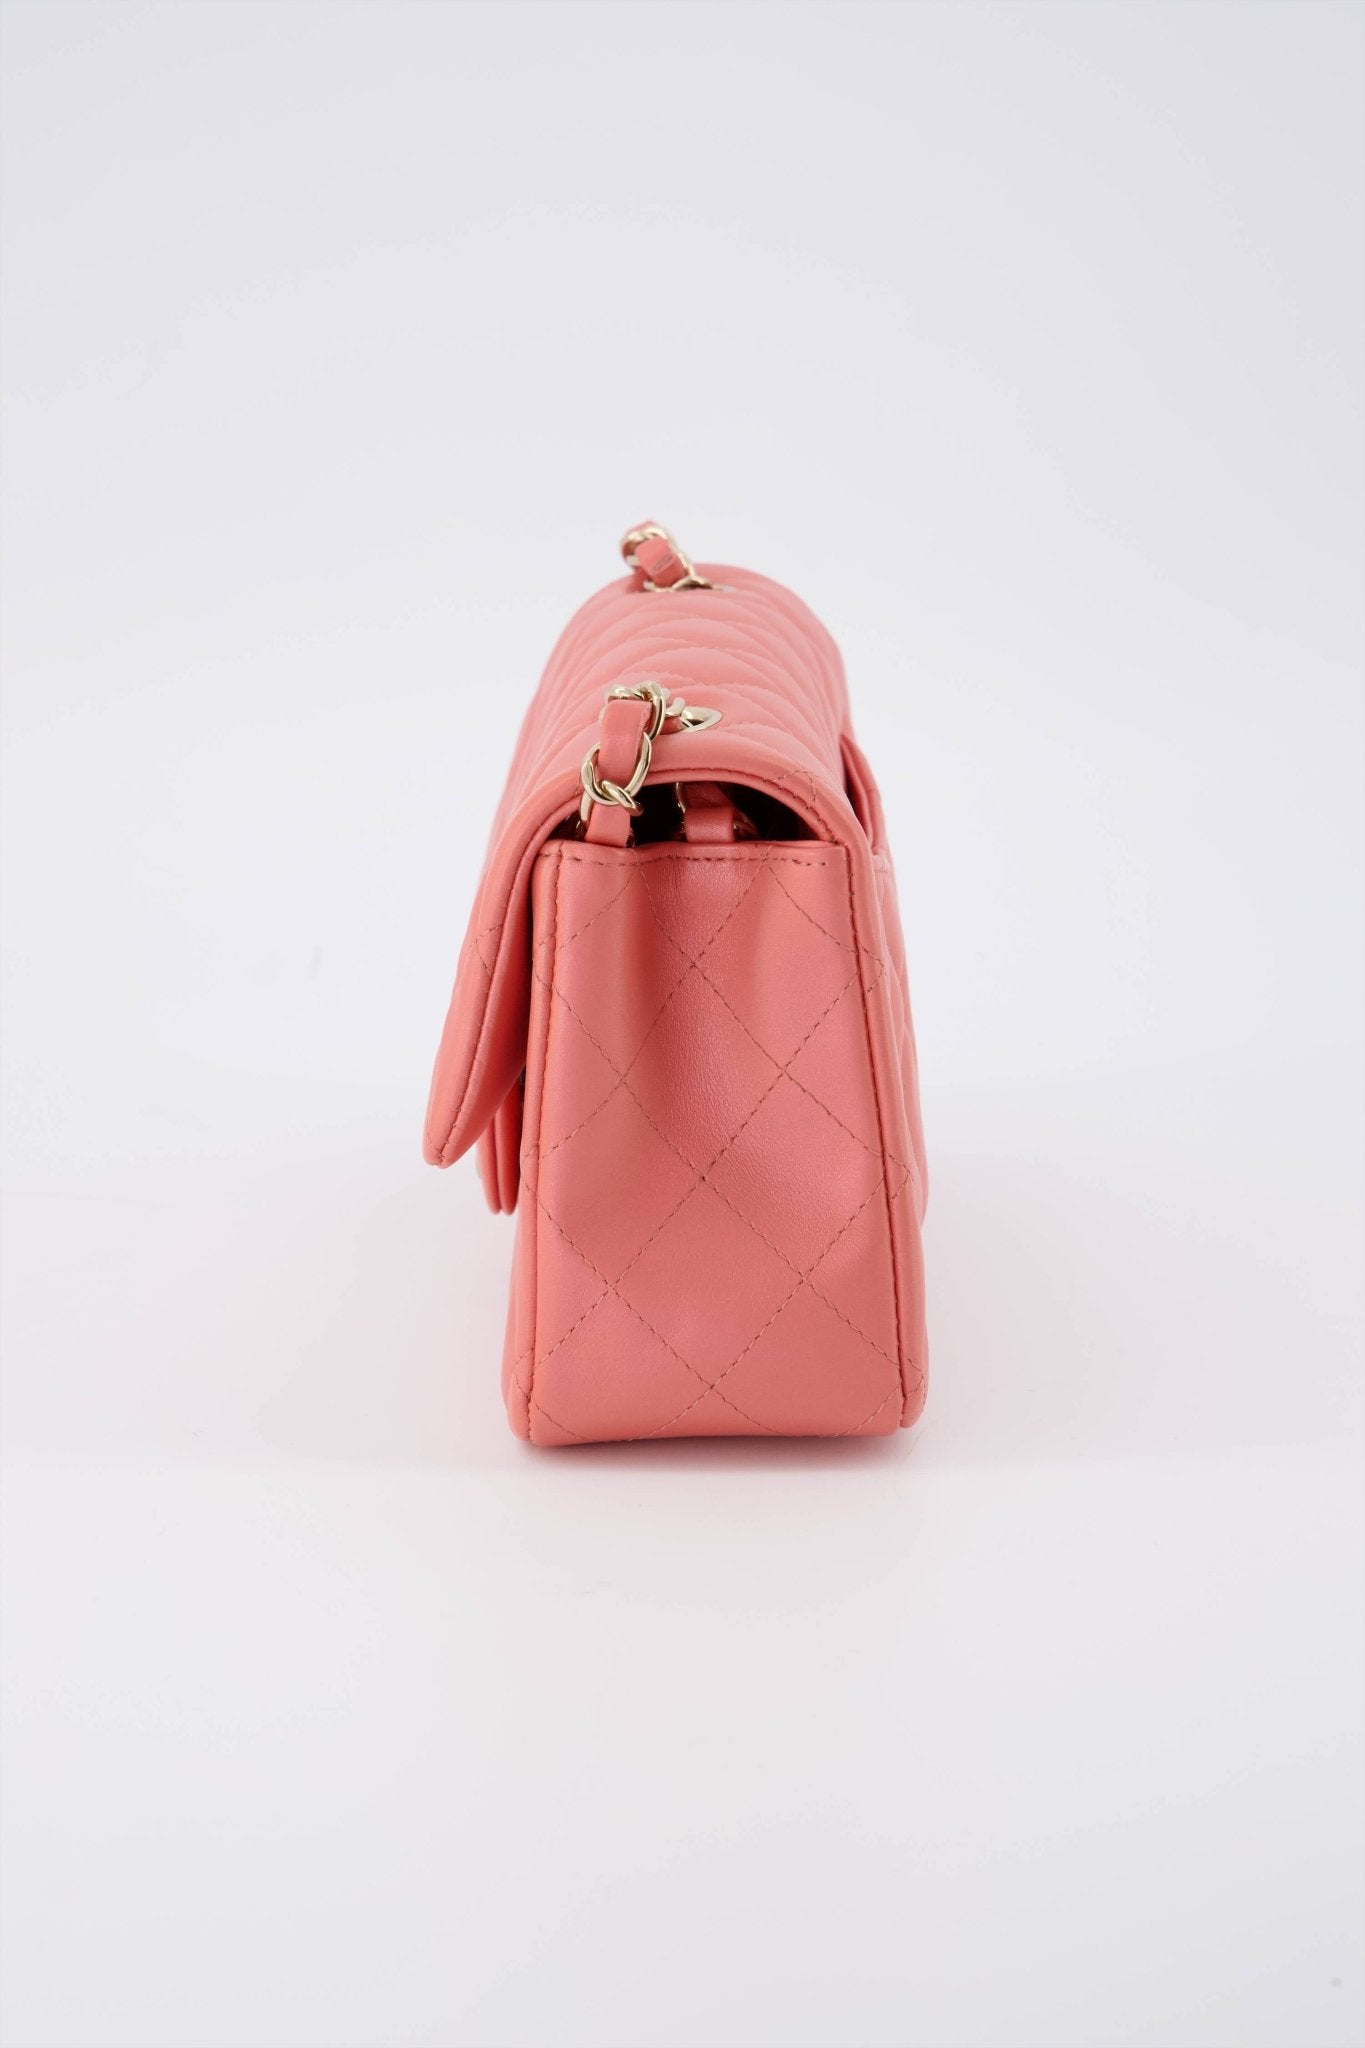 CHANEL Hot Pink & White Jumbo Flap Bag, 100%